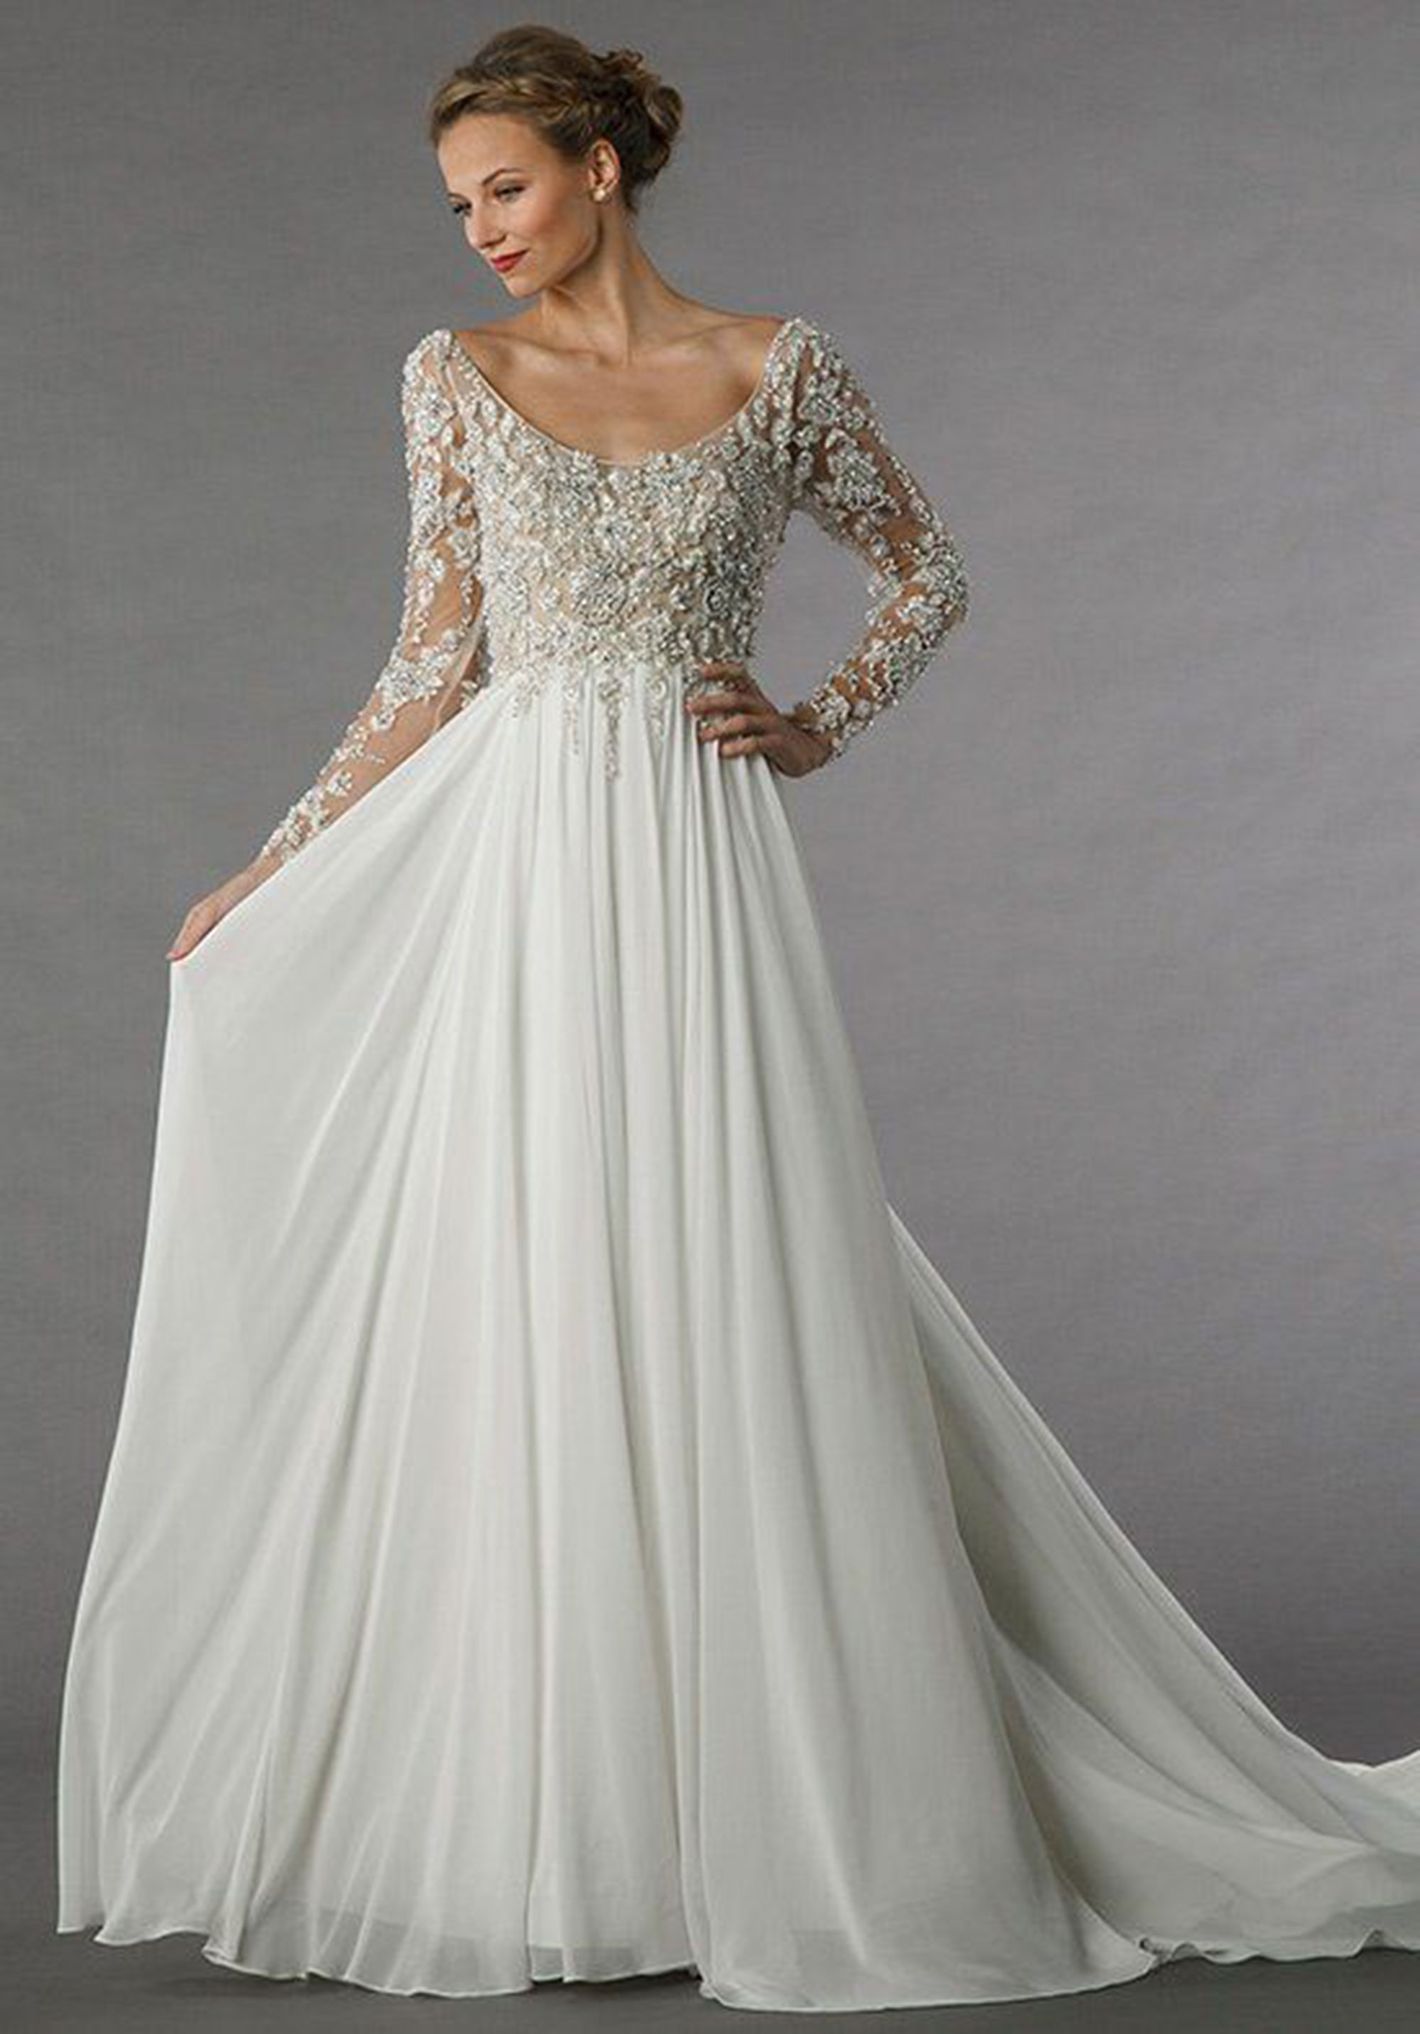 23 Elegant Long Sleeve Wedding Dresses For Winter Weddings 9316